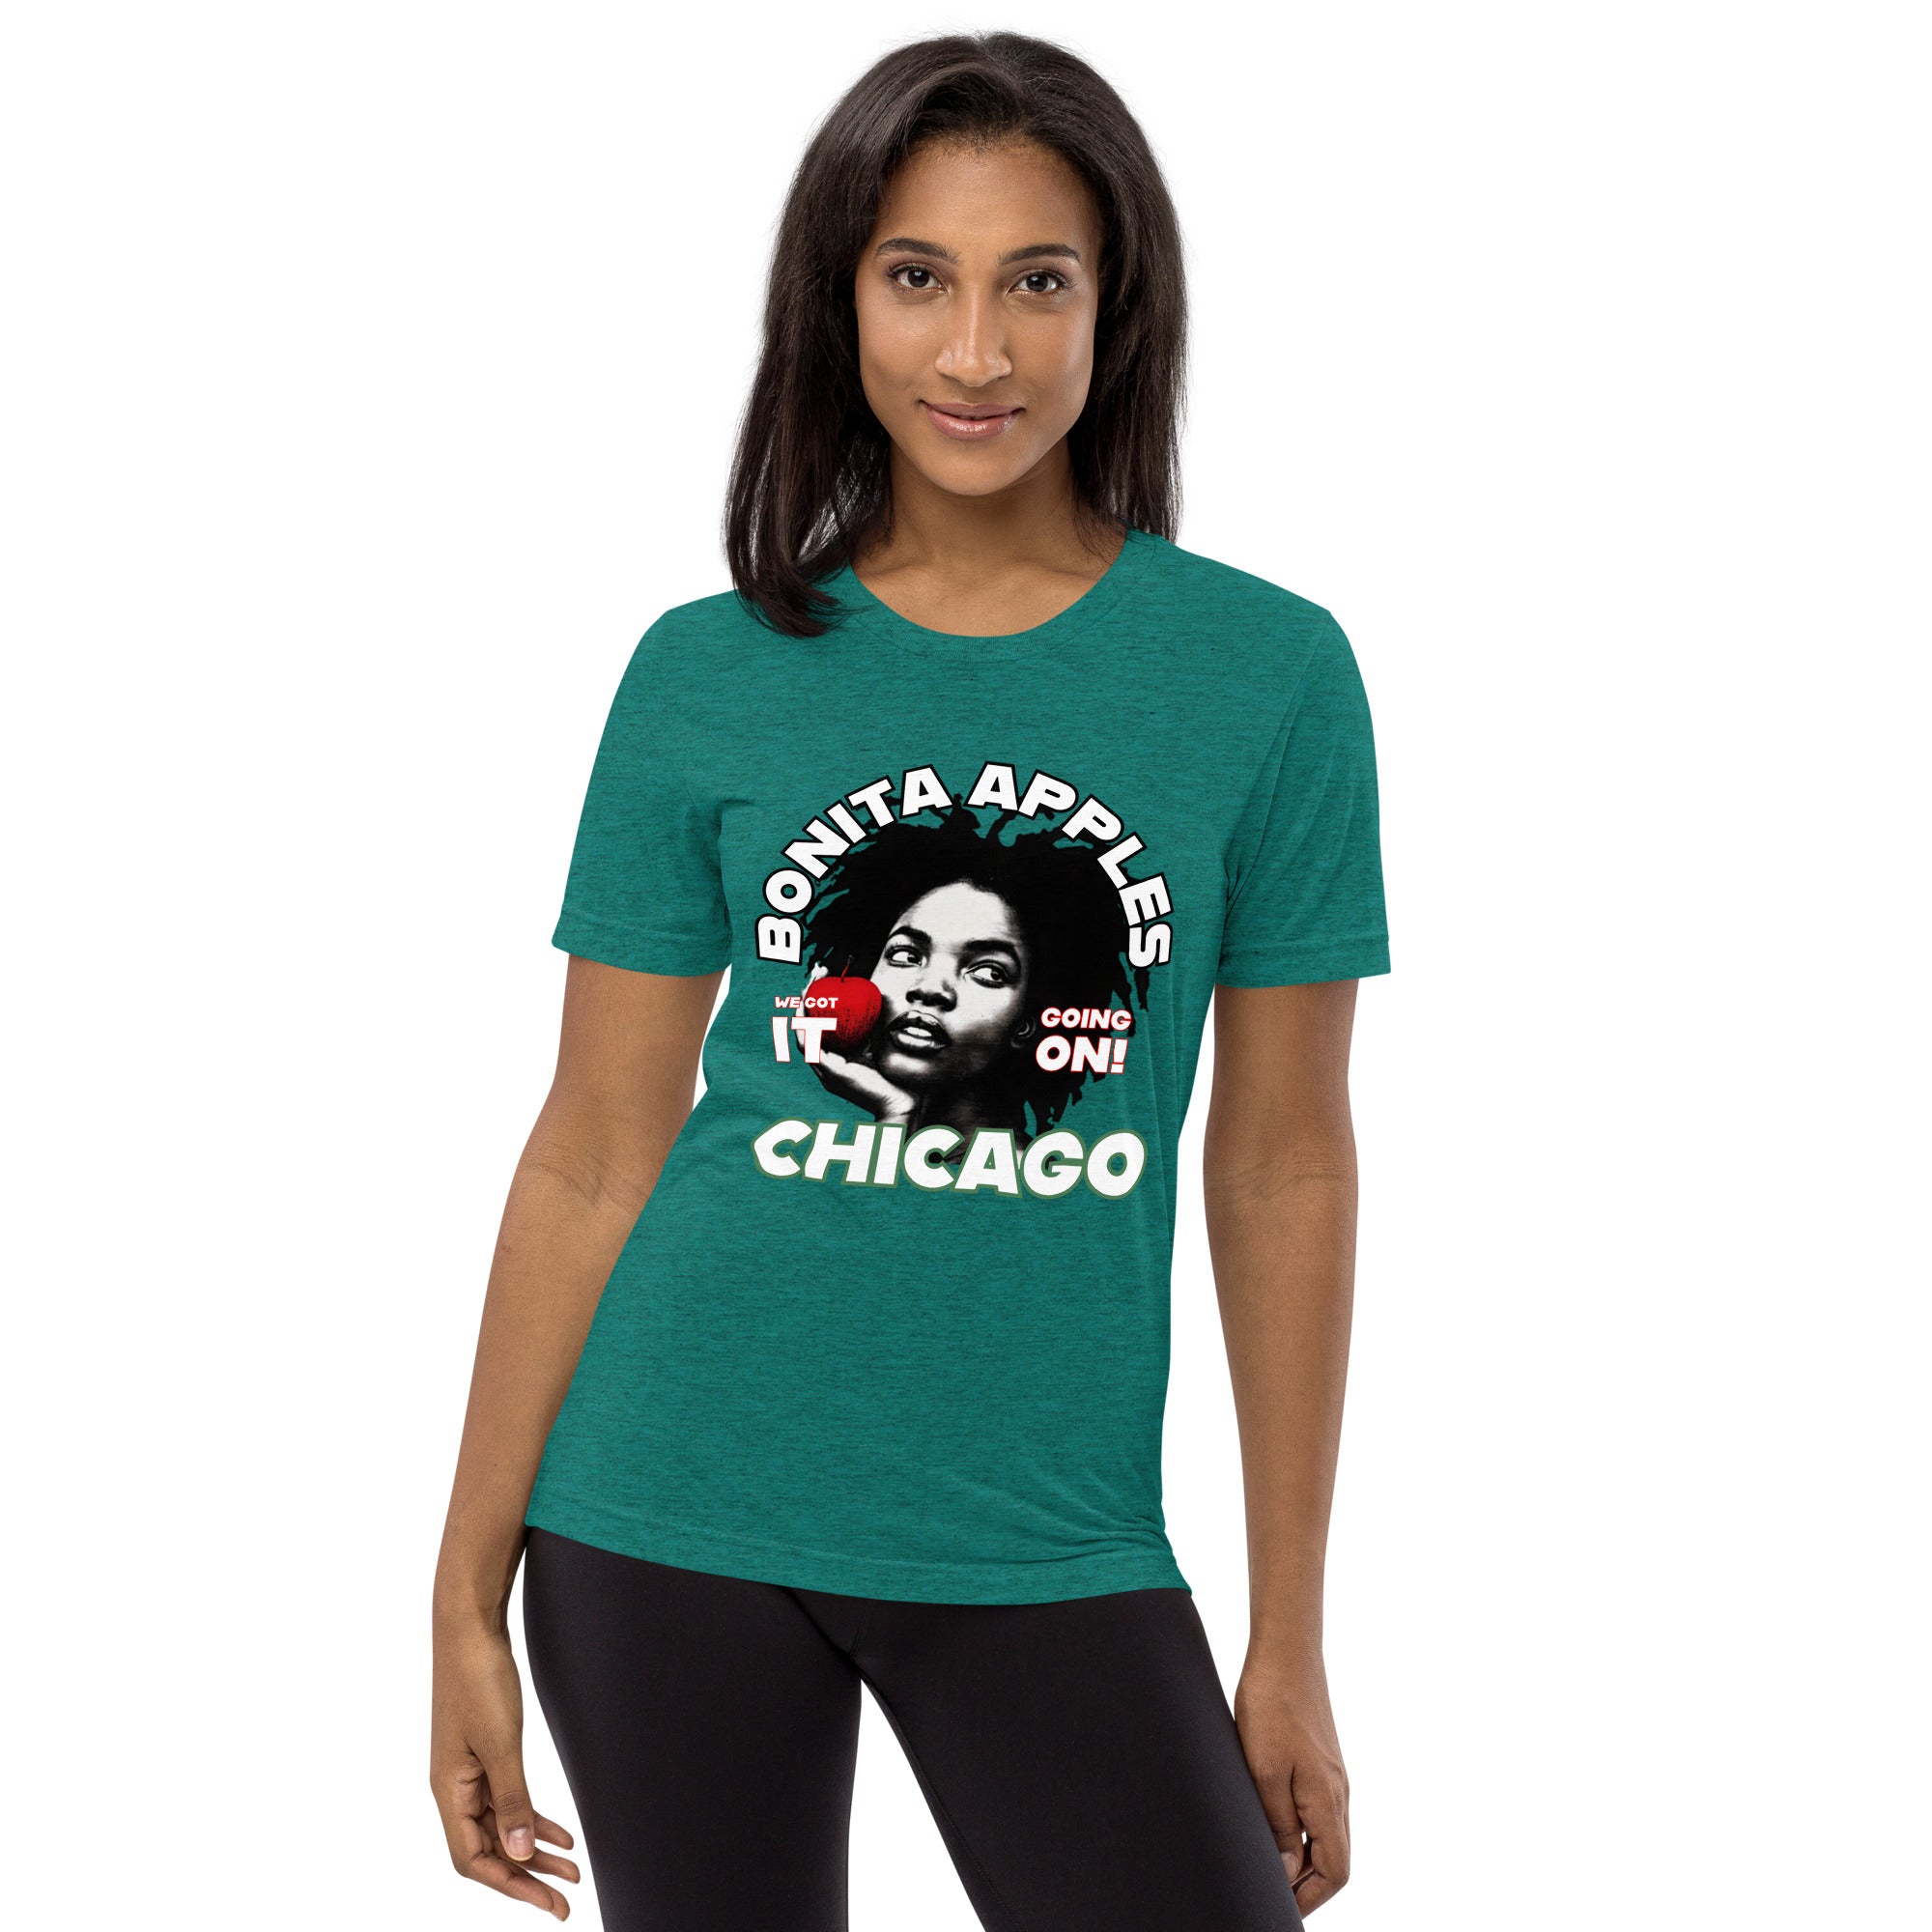 BONITA APPLES CHICAGO Women's Relaxed T-Shirt